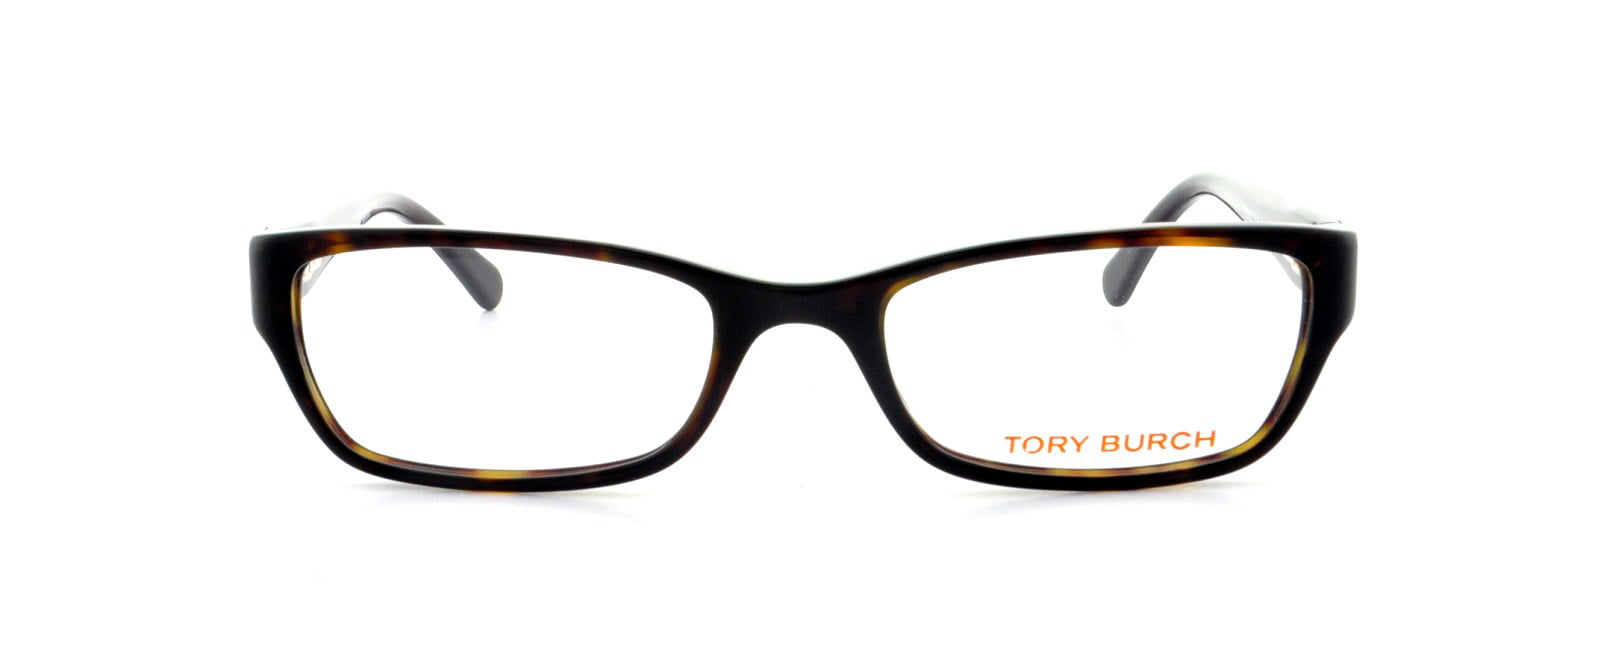 TORY BURCH Eyeglasses TY 2003 510 Tortoise 51MM 